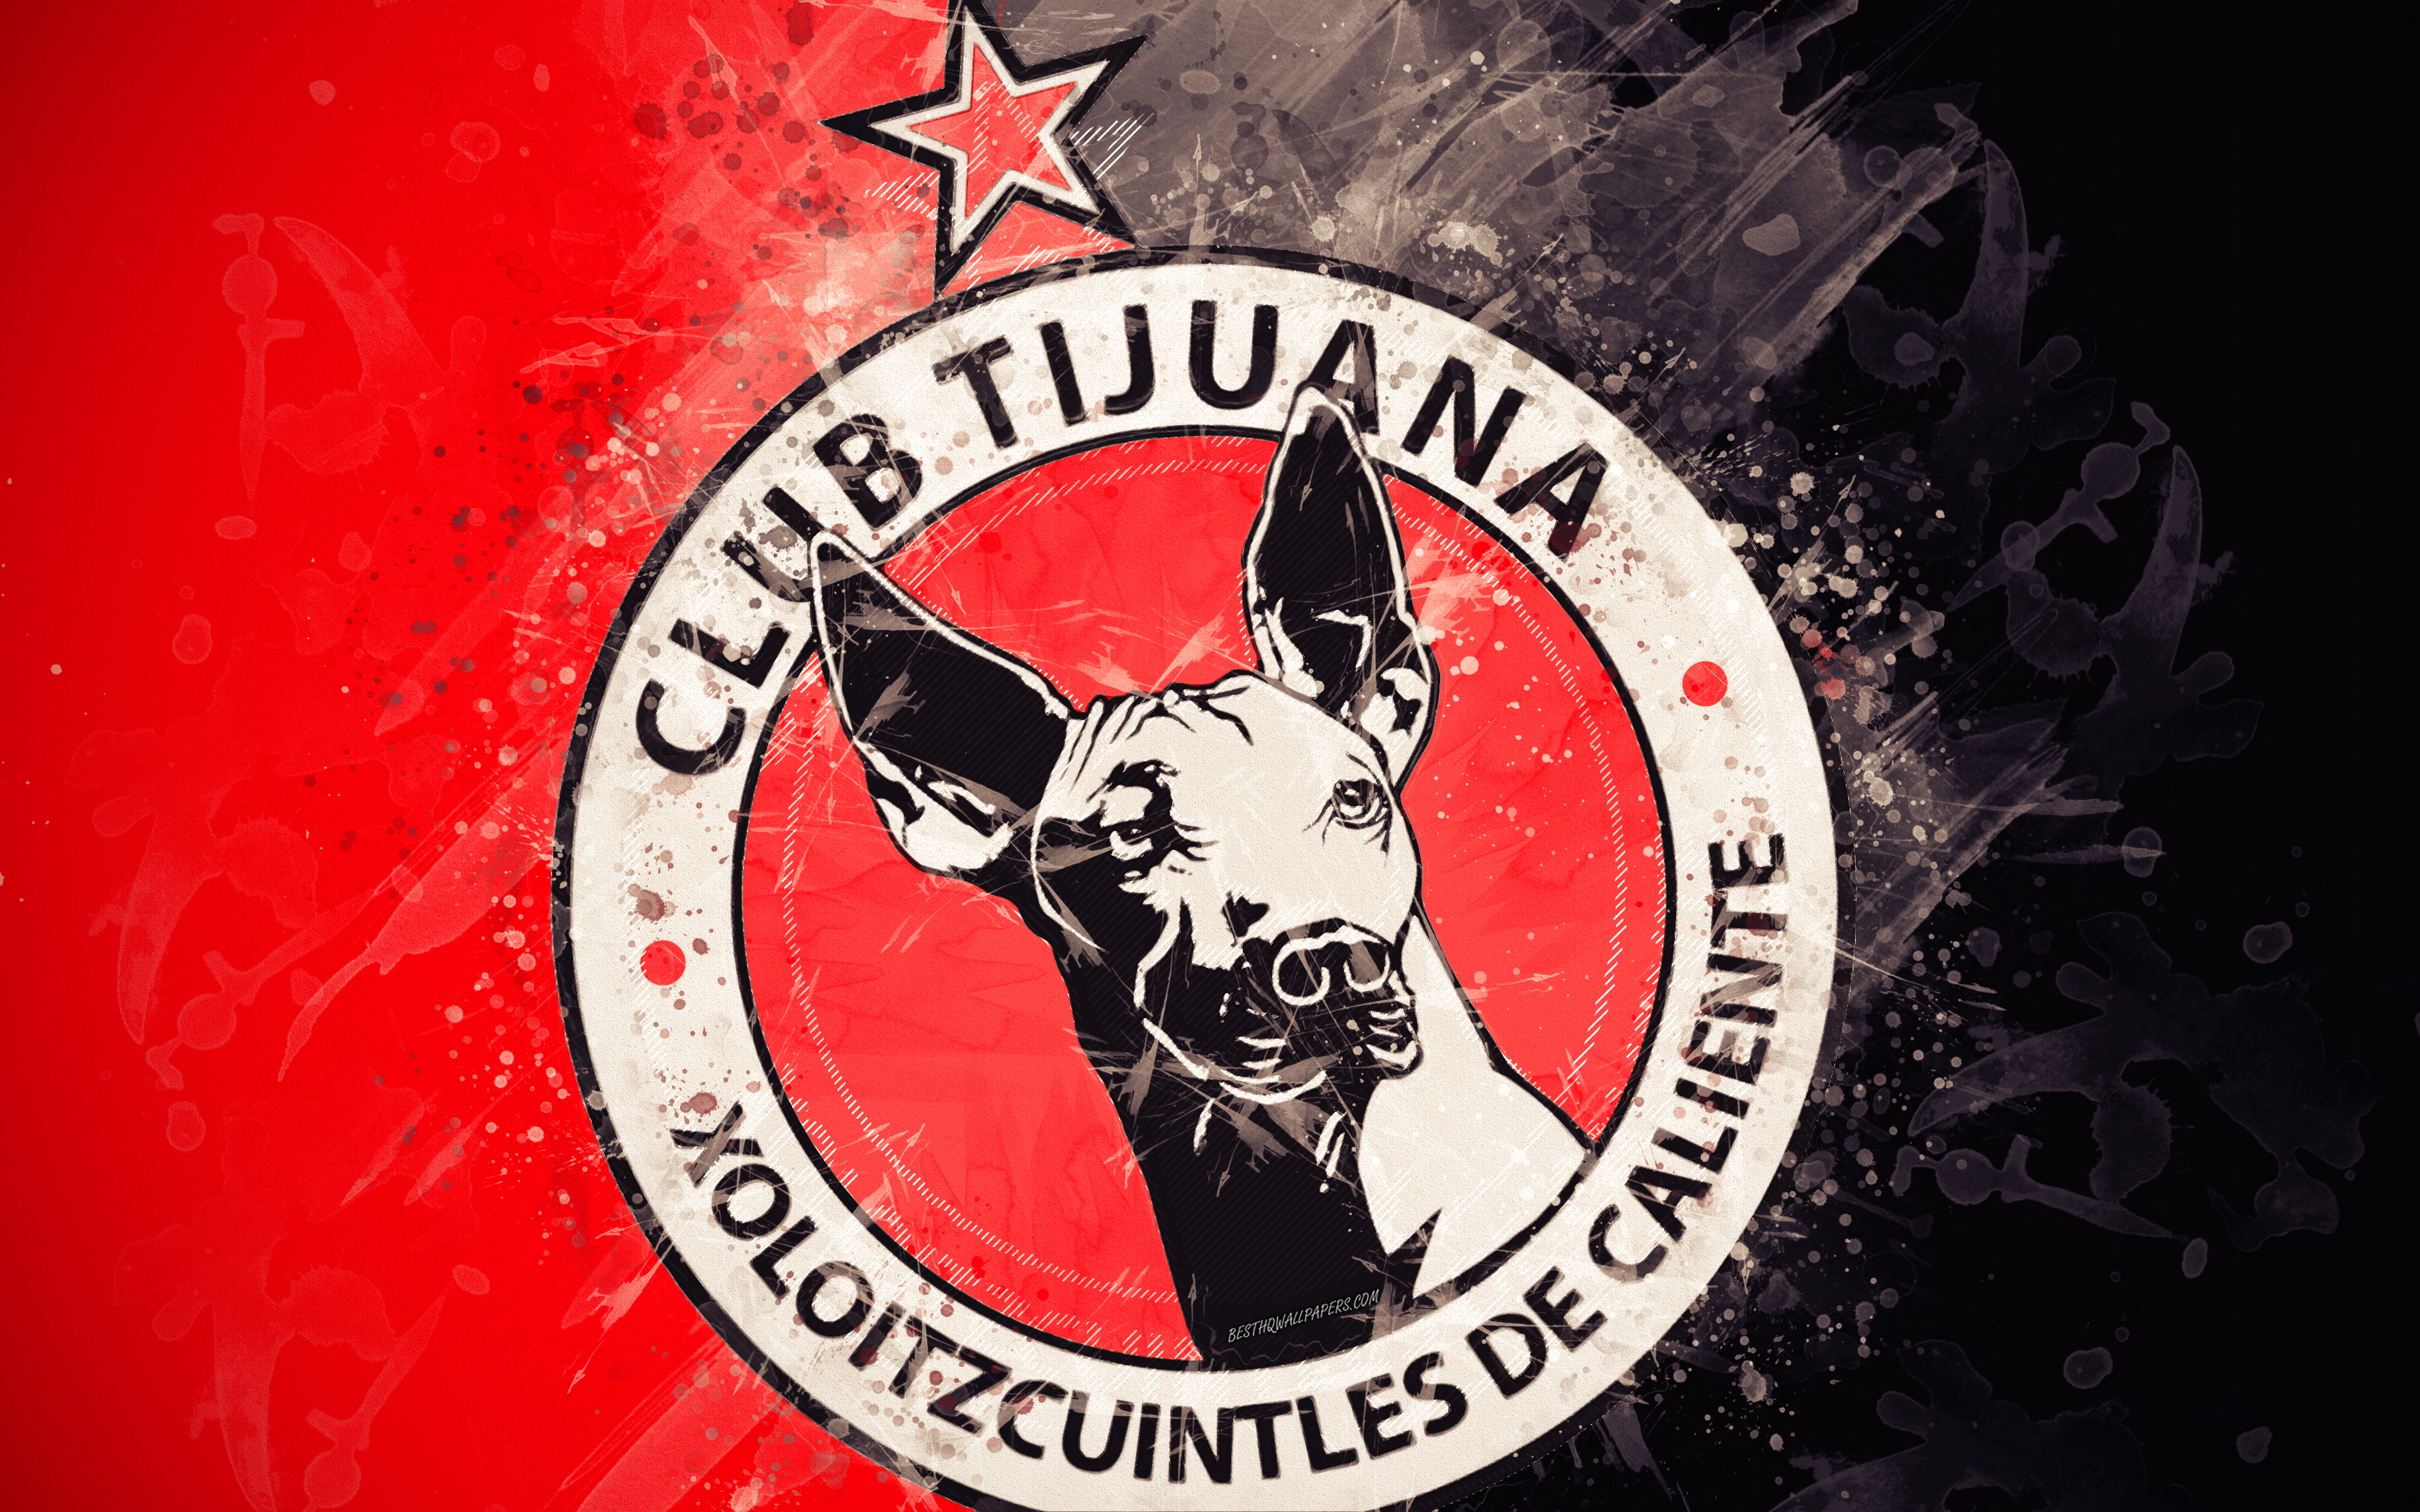 Download wallpaper Club Tijuana, 4k, paint art, creative, Mexican